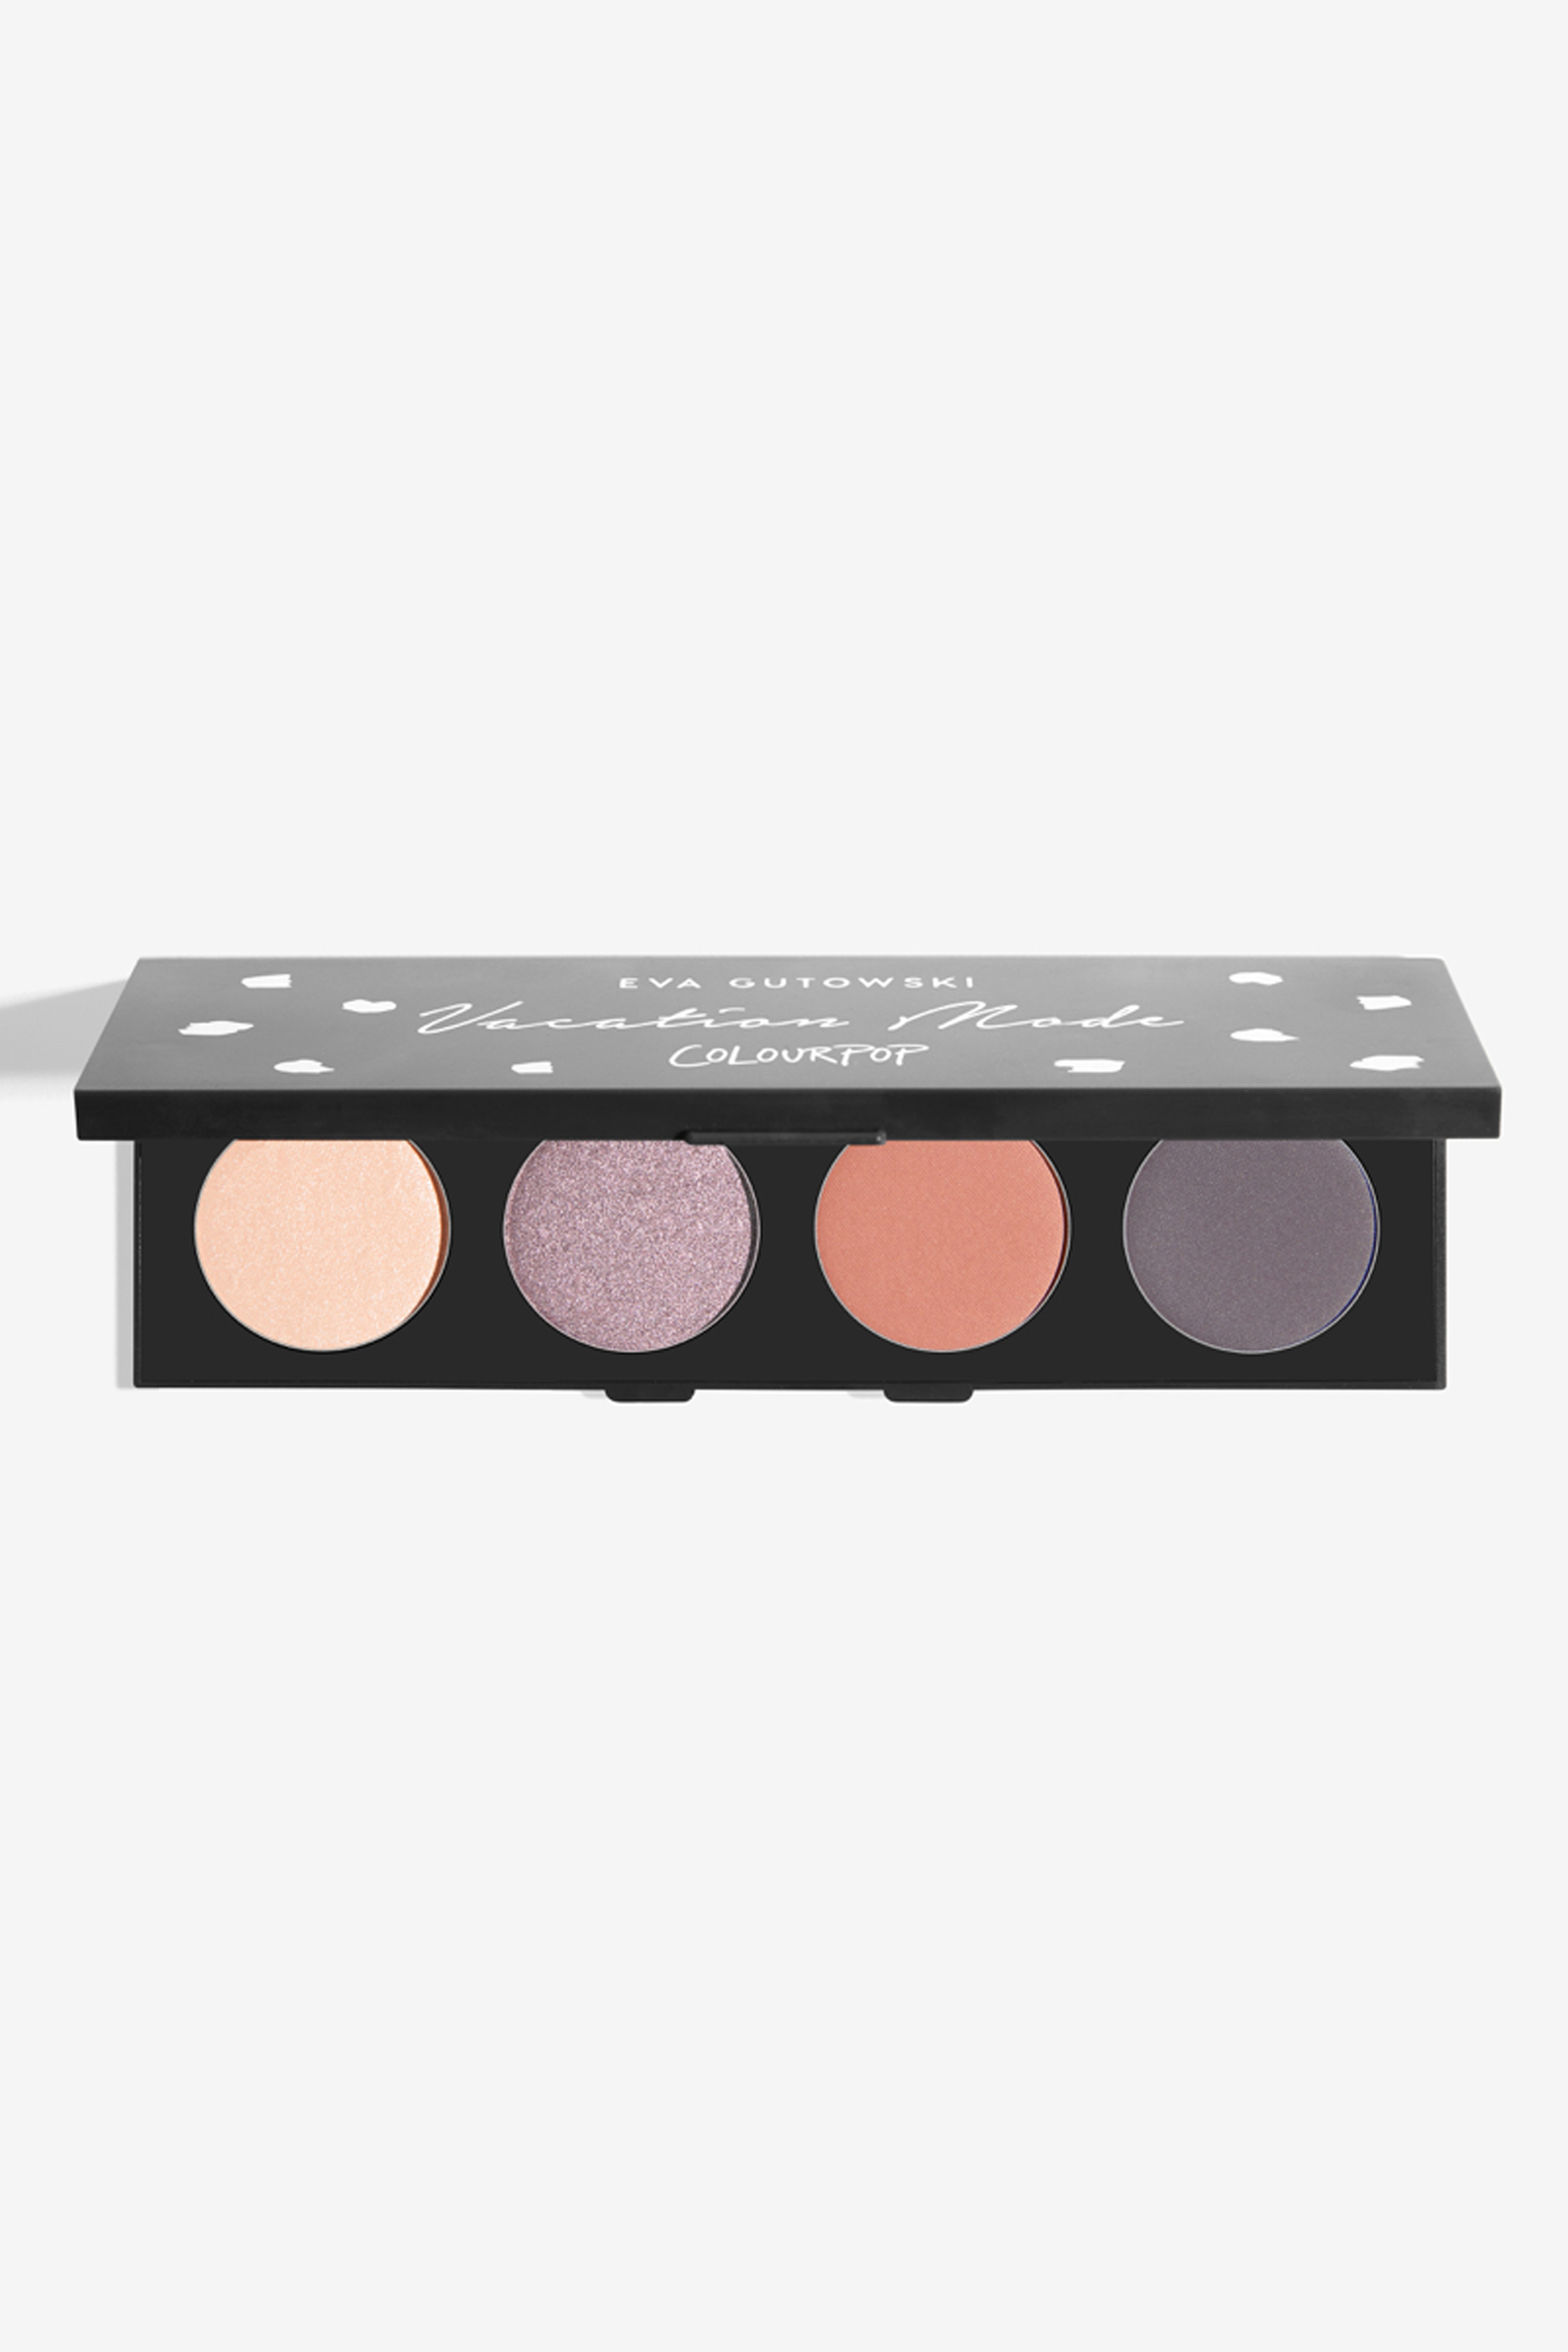 ColourPop x MyLifeAsEva Makeup Collection Collaboration Release Eyeshadow Lipstick Products Eva Gutowski